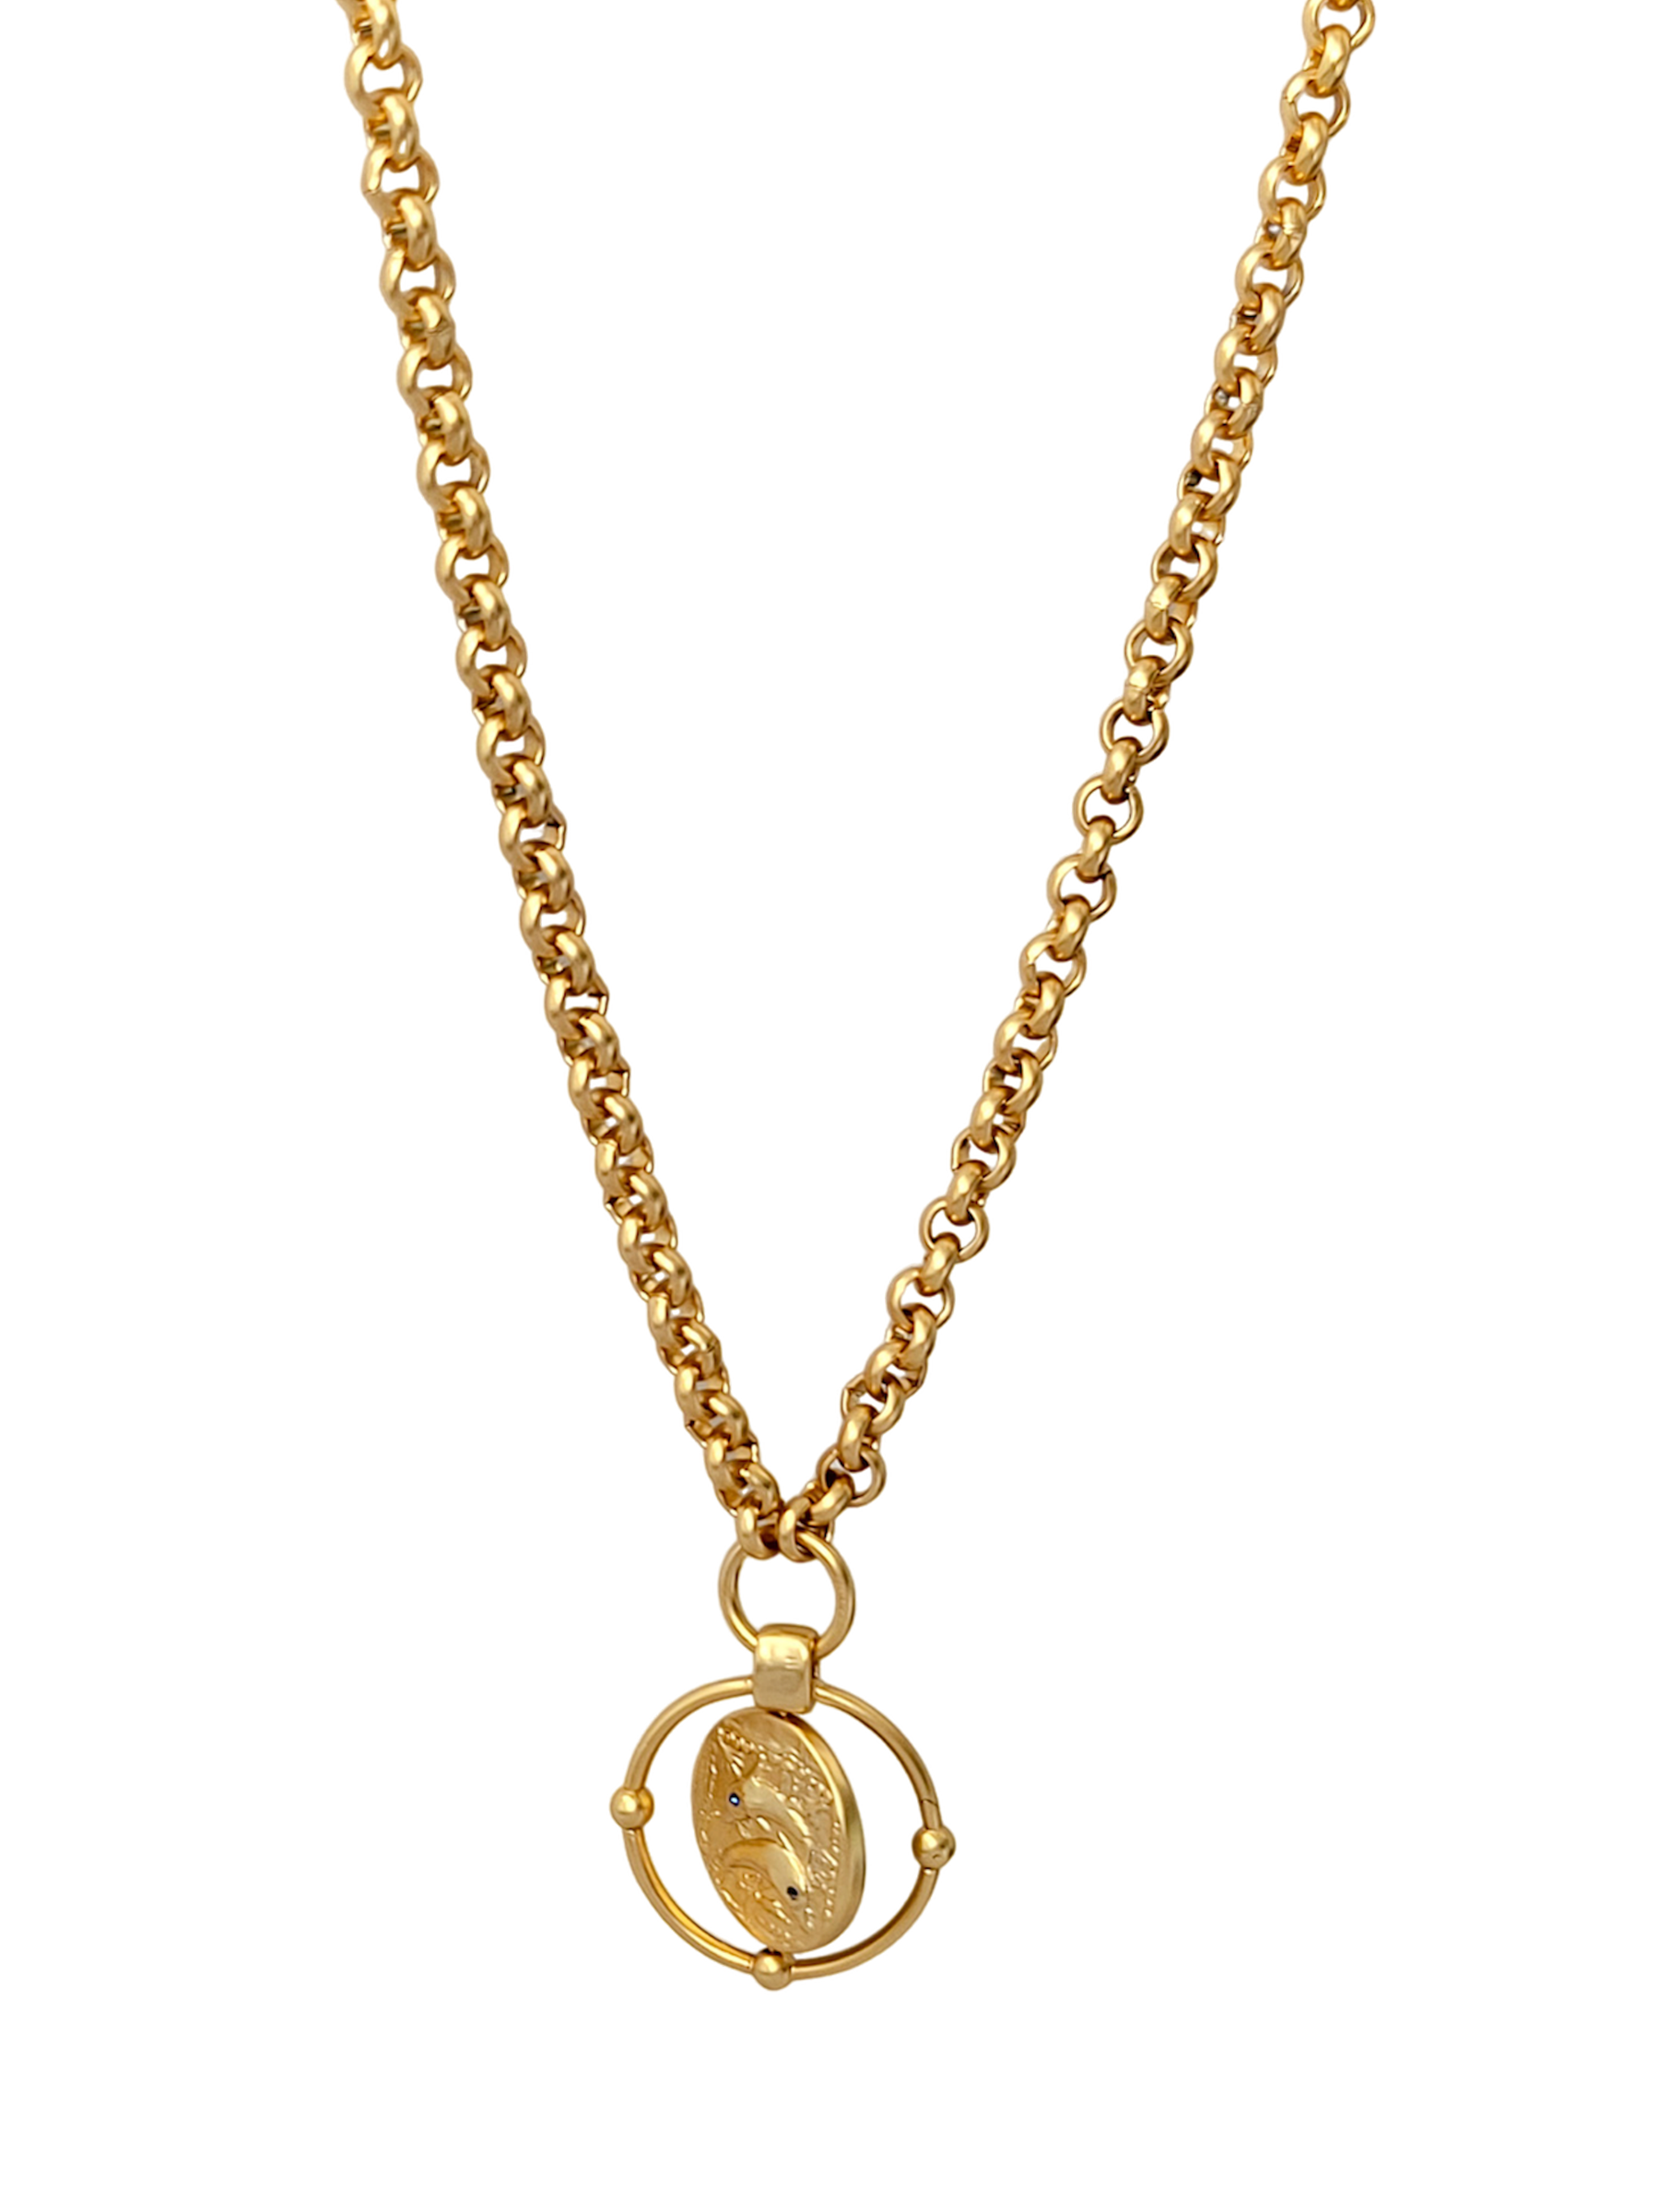 Dolphin Coin Pendant Necklace